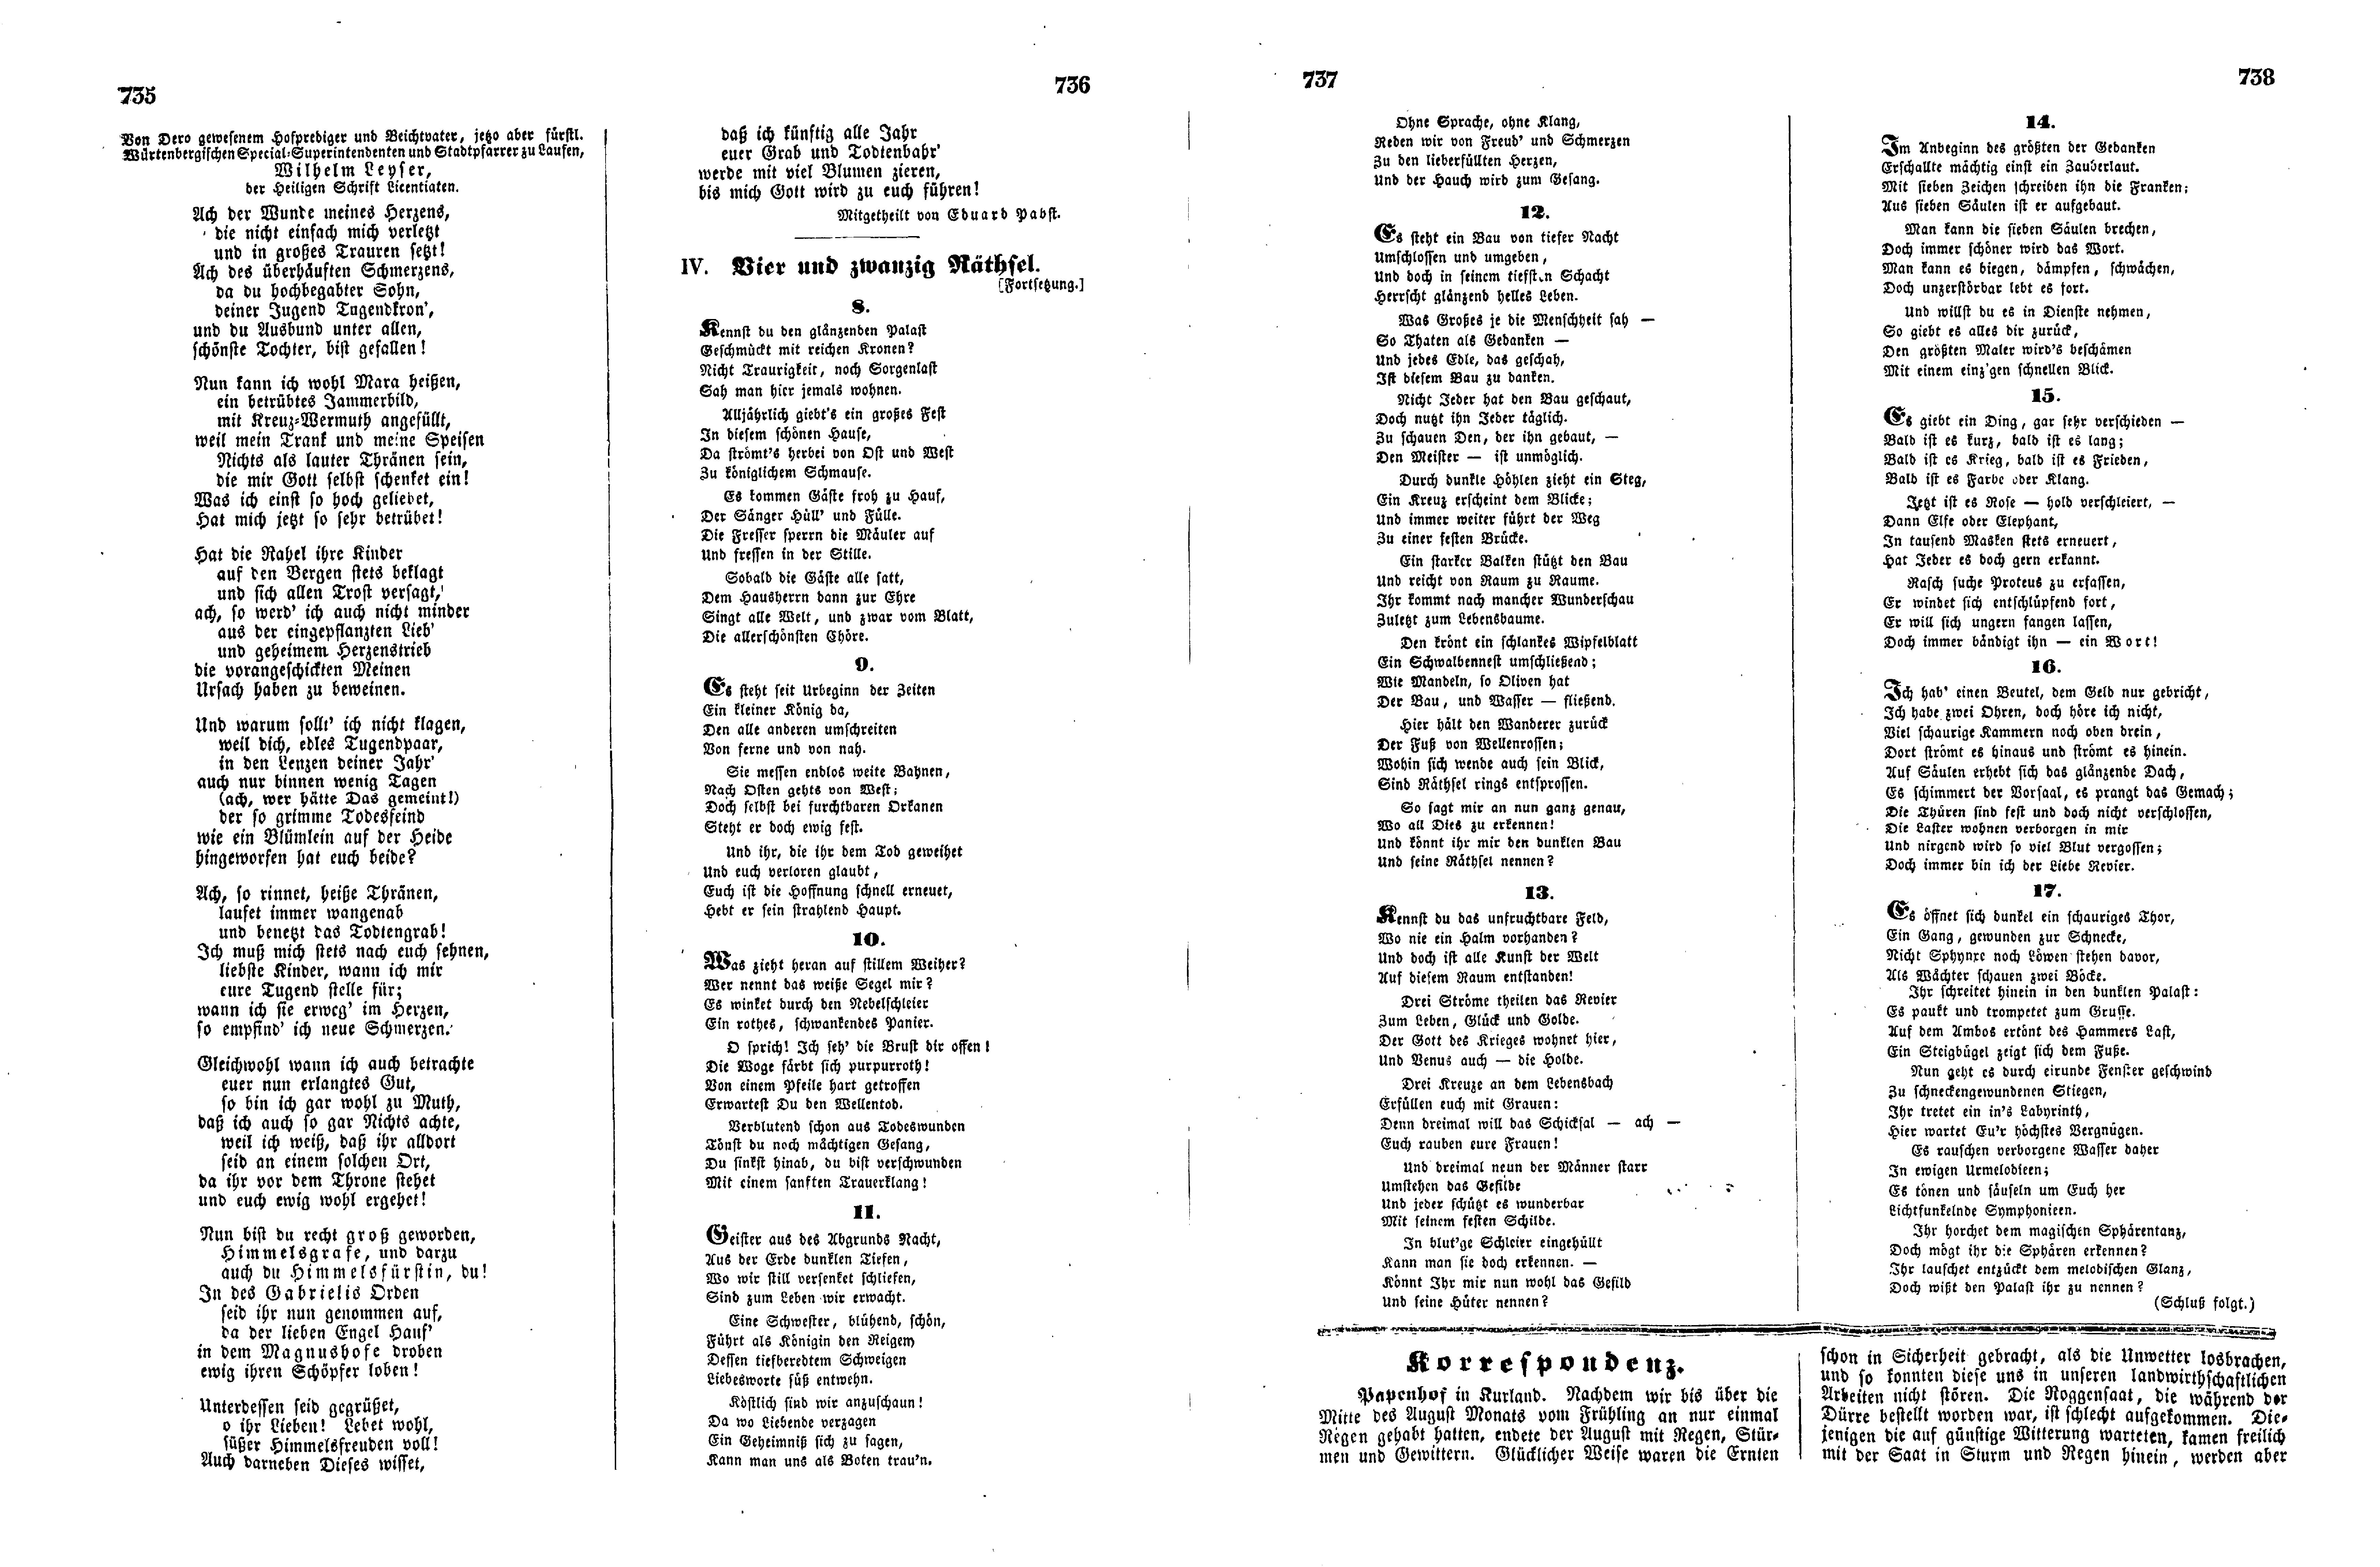 Das Inland [17] (1852) | 189. (735-738) Main body of text